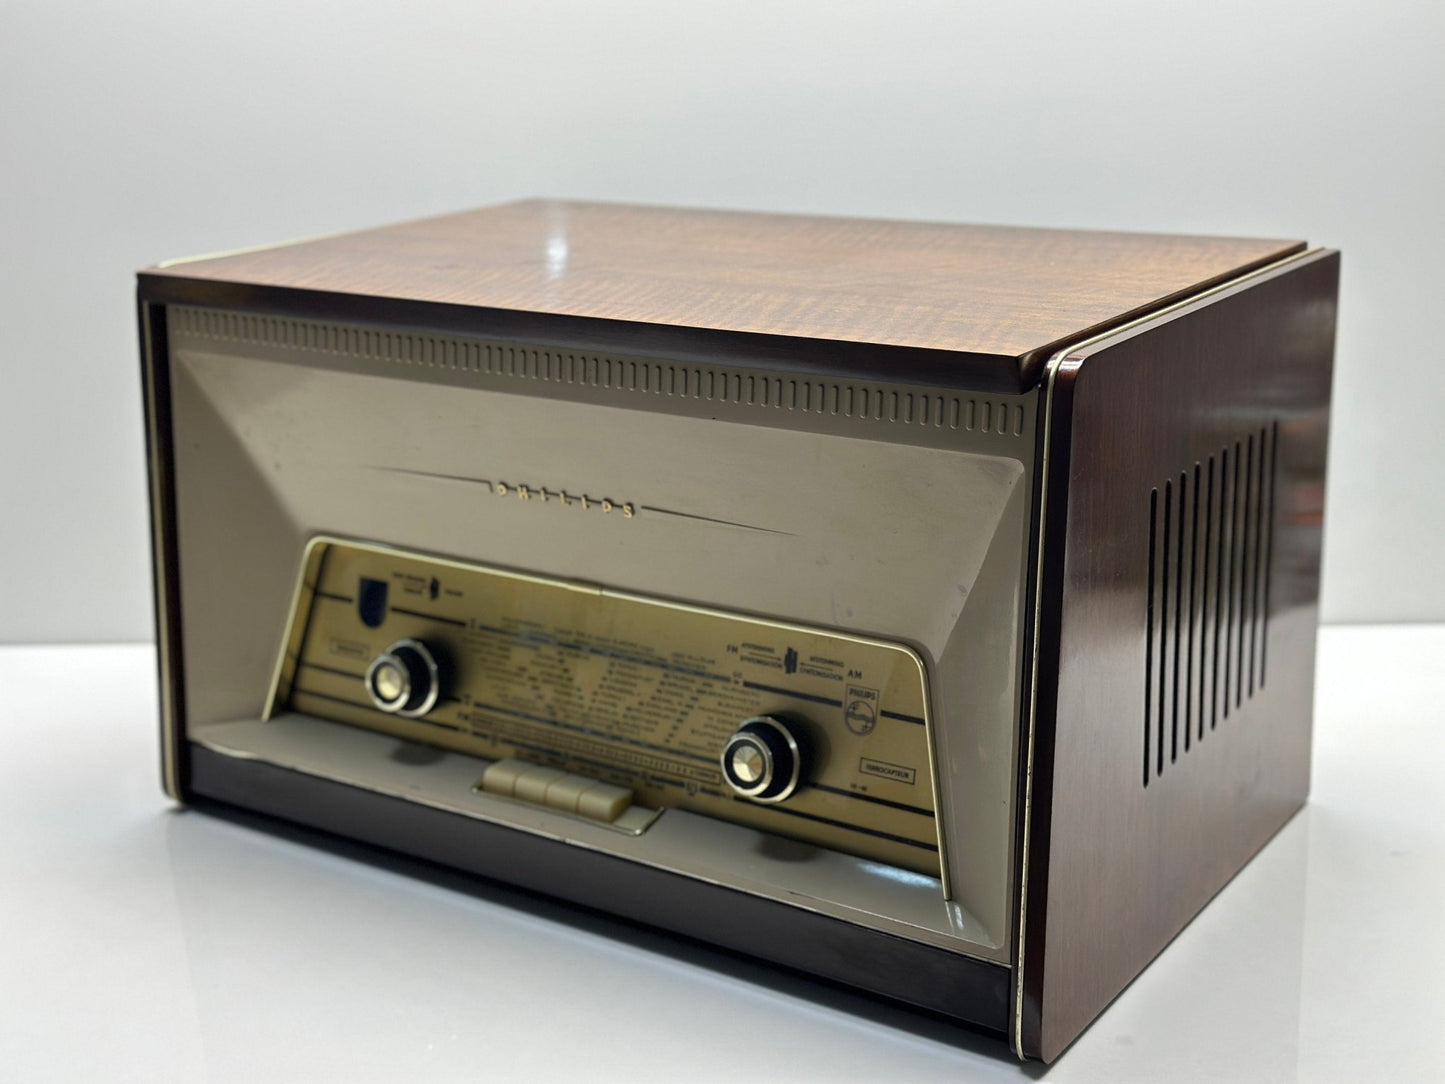 Antique Philips Radio and Record Player - Walnut Finish, Taba Patterns, Refurbished